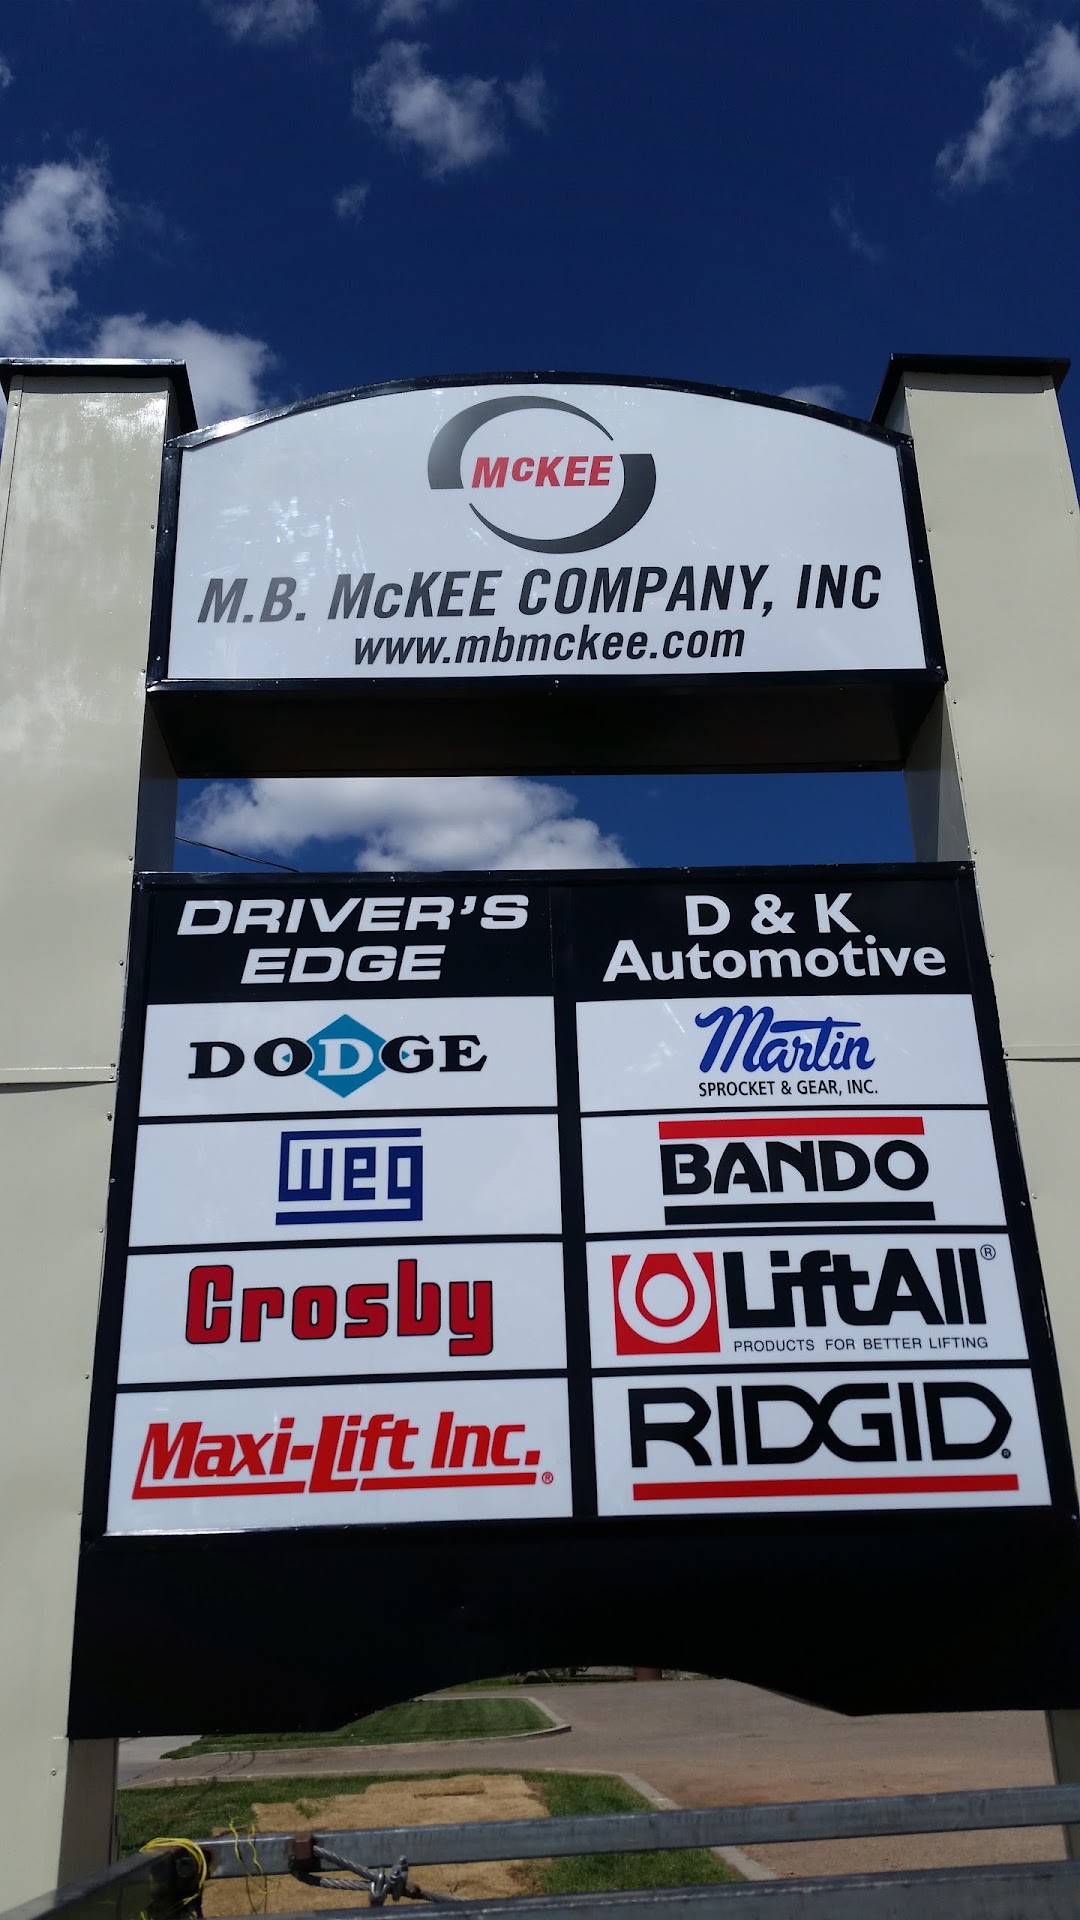 M.B. McKee Company, Inc.